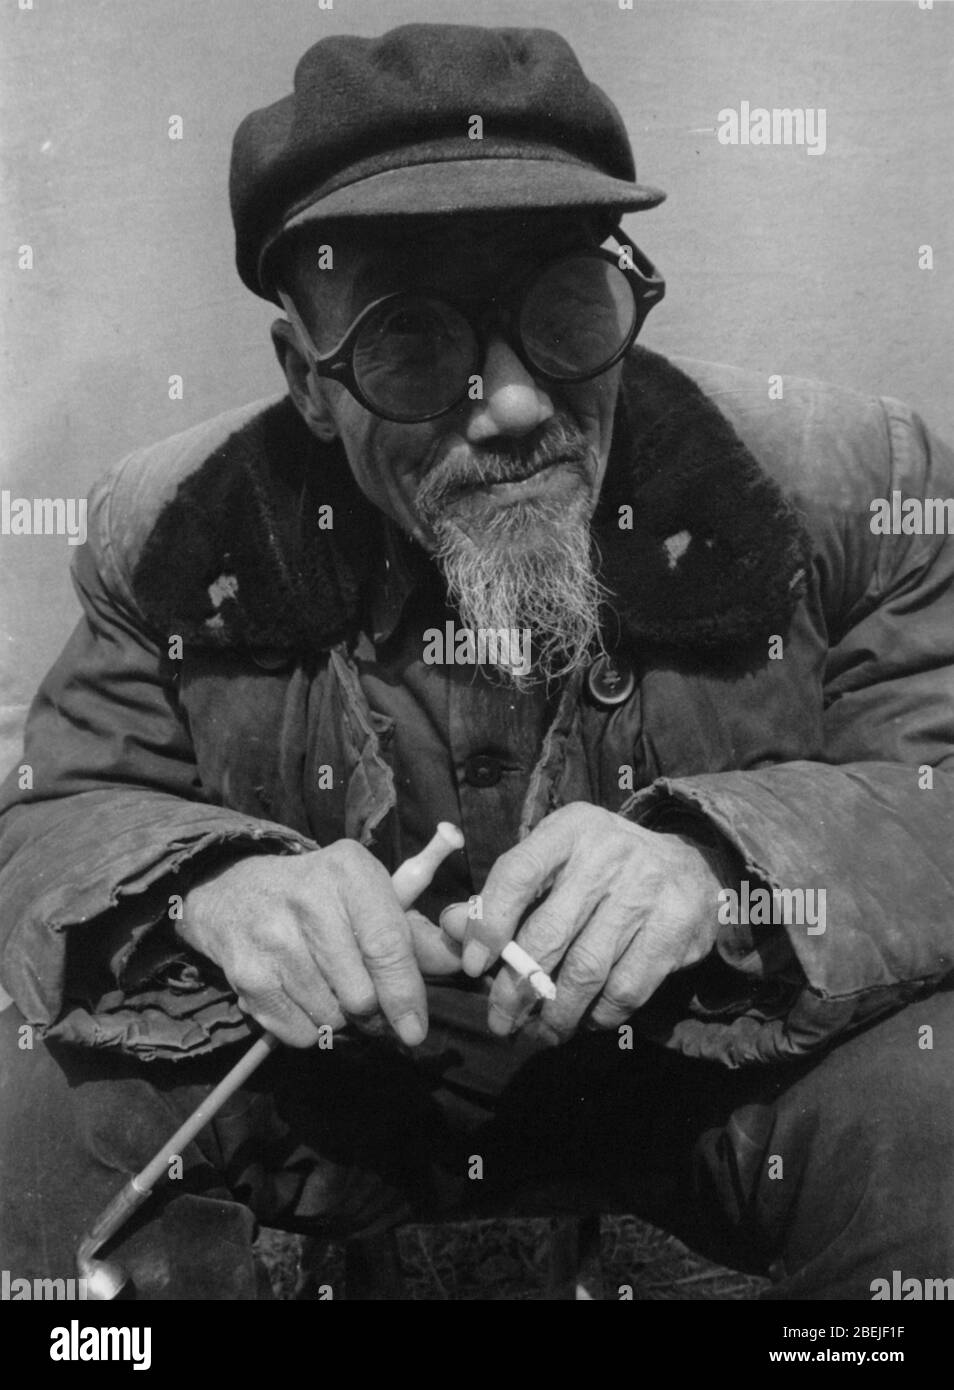 Old man smoking a cigarette Banque D'Images